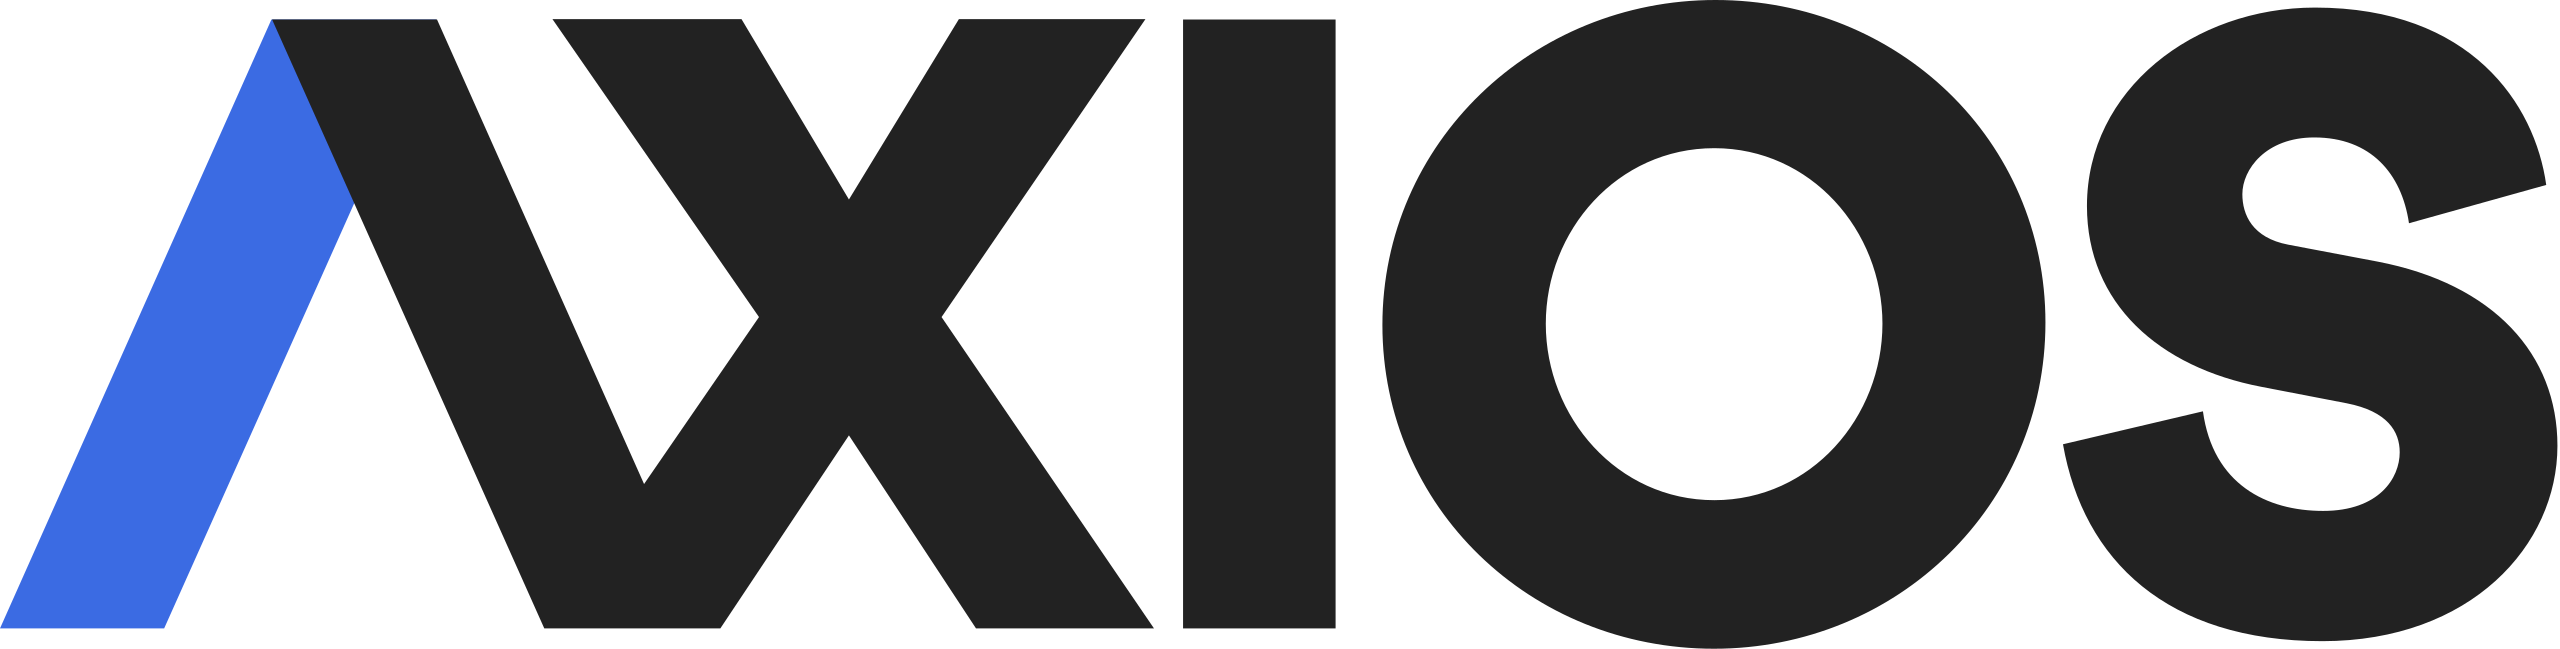 news agency axios logo